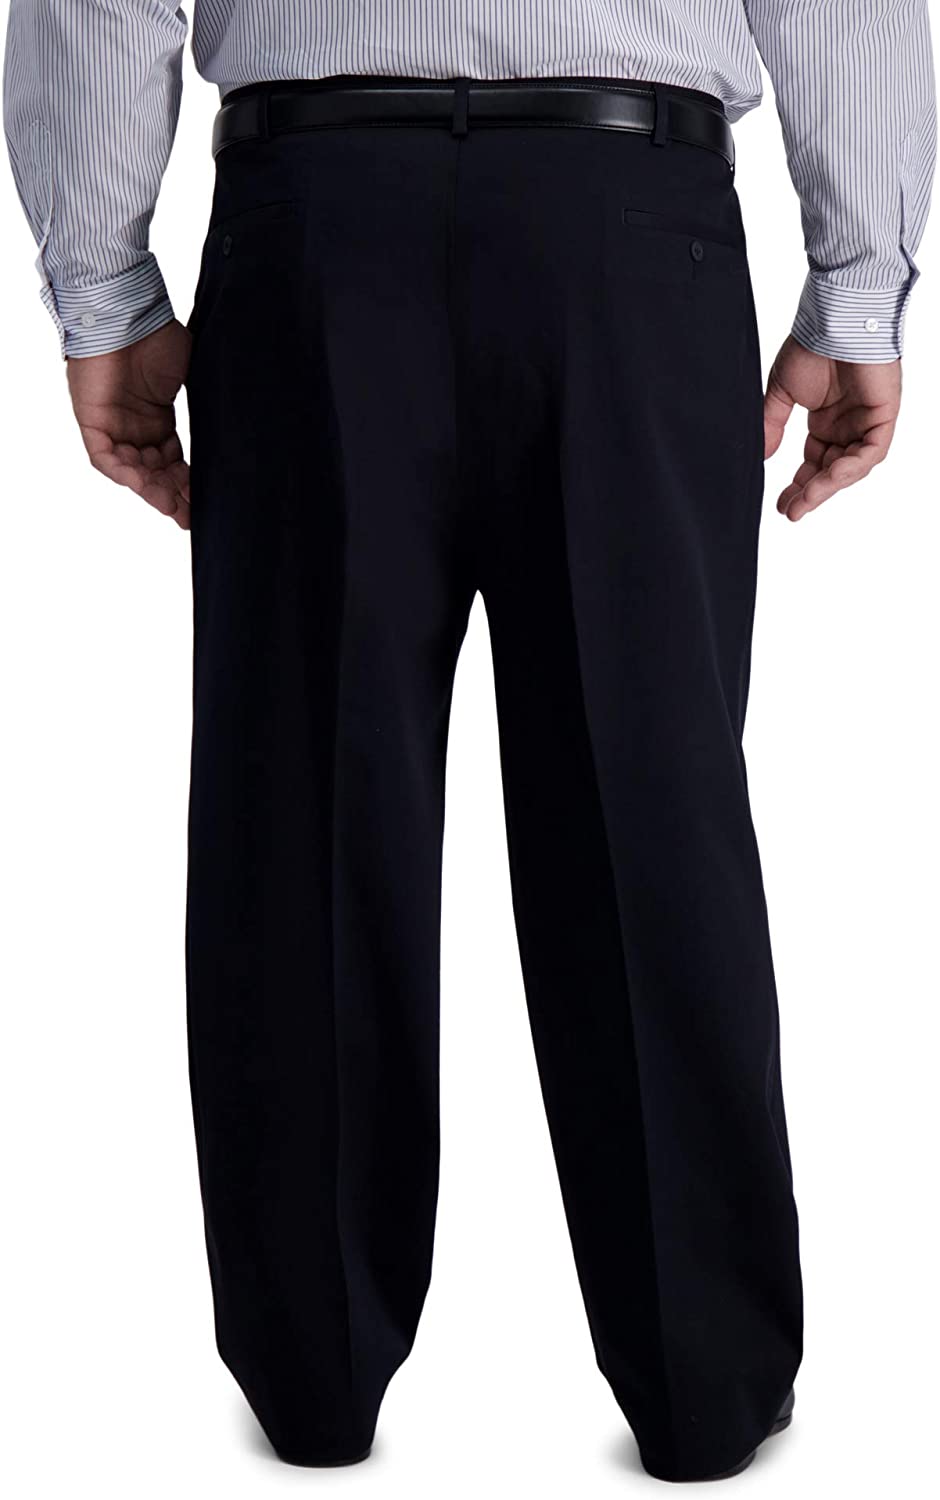 Haggar Men's Iron Free Premium Khaki Classic Fit Pleat Front Pant - Regular and Big & Tall Sizes 44W x 30L Caviar - image 3 of 6